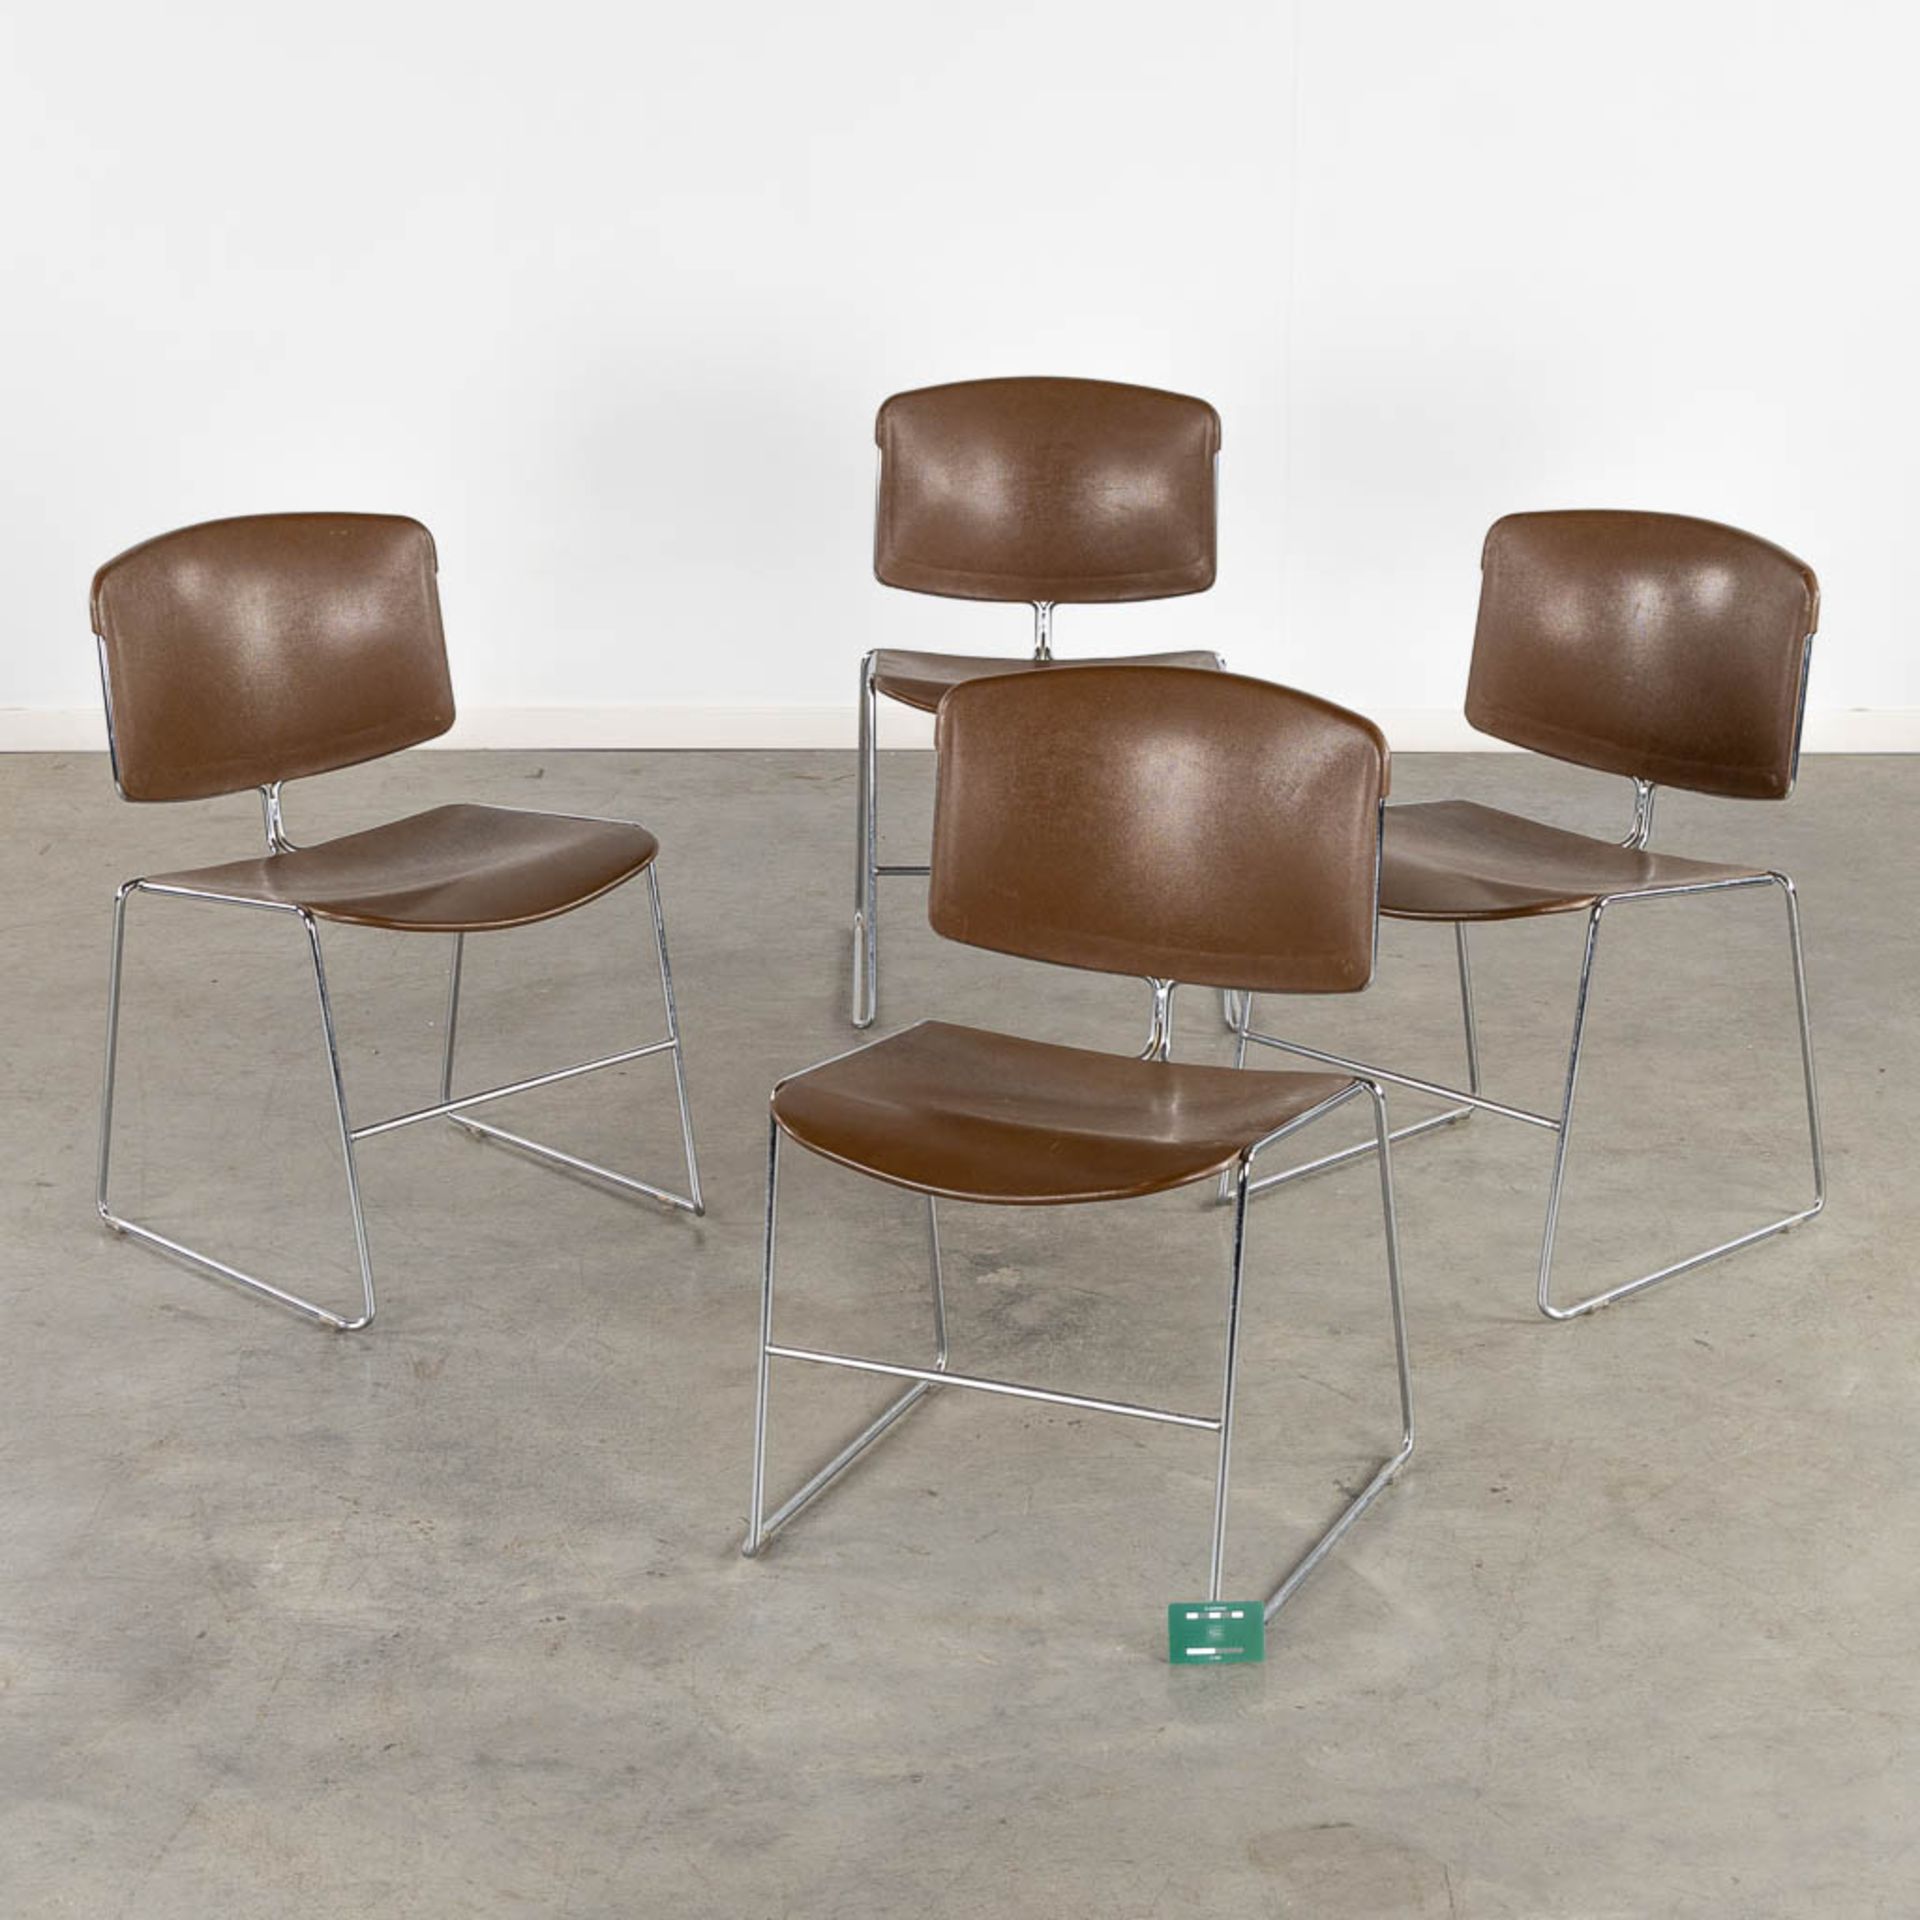 A set of 4 mid-century chairs 'Steelcase Max Stacker' chairs. (L:52 x W:50 x H:78 cm) - Bild 2 aus 14